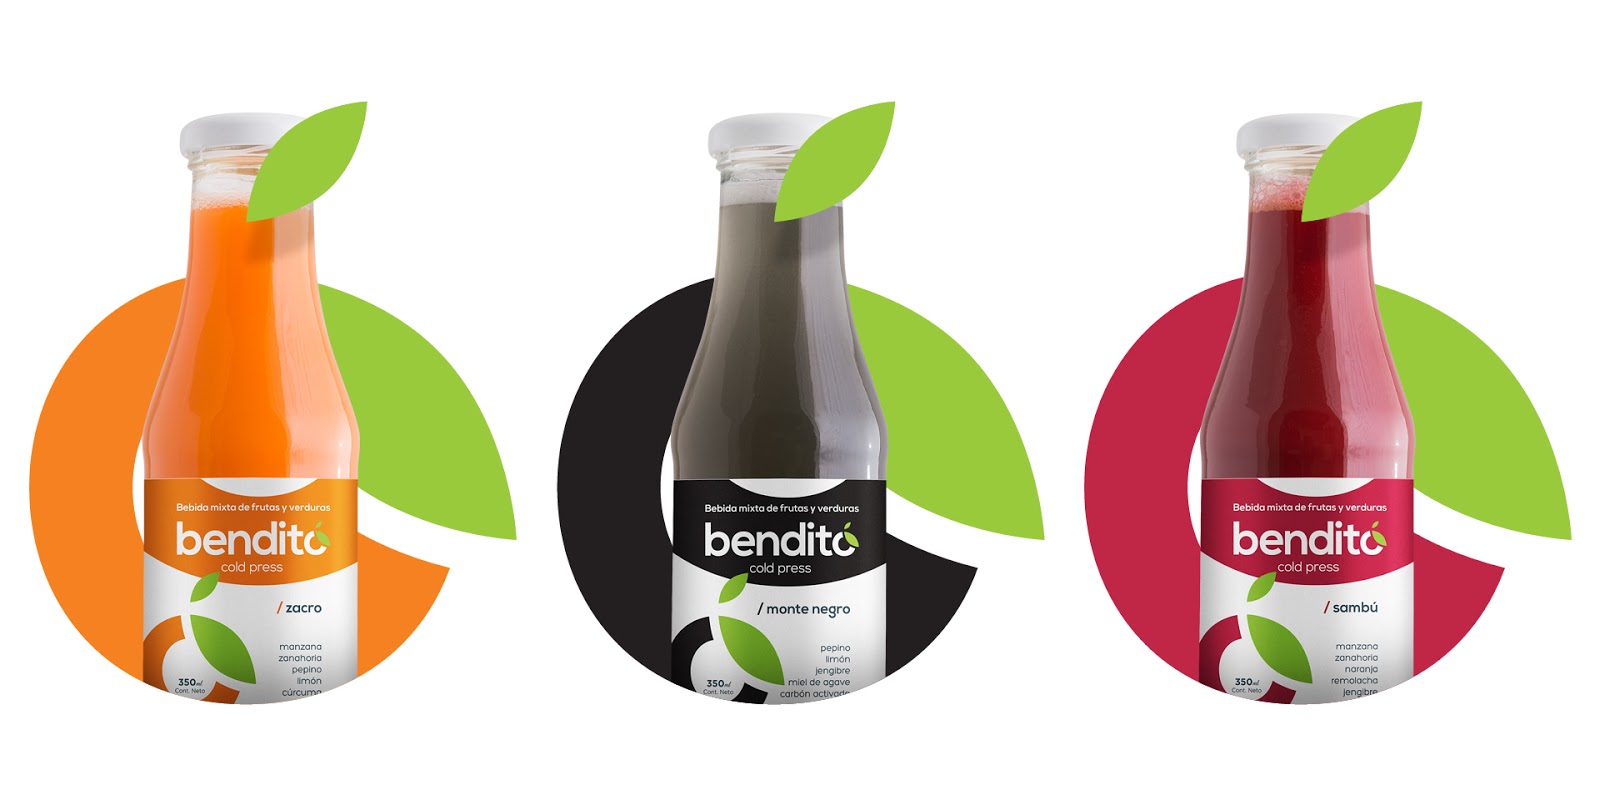 Bendito果汁包装设计